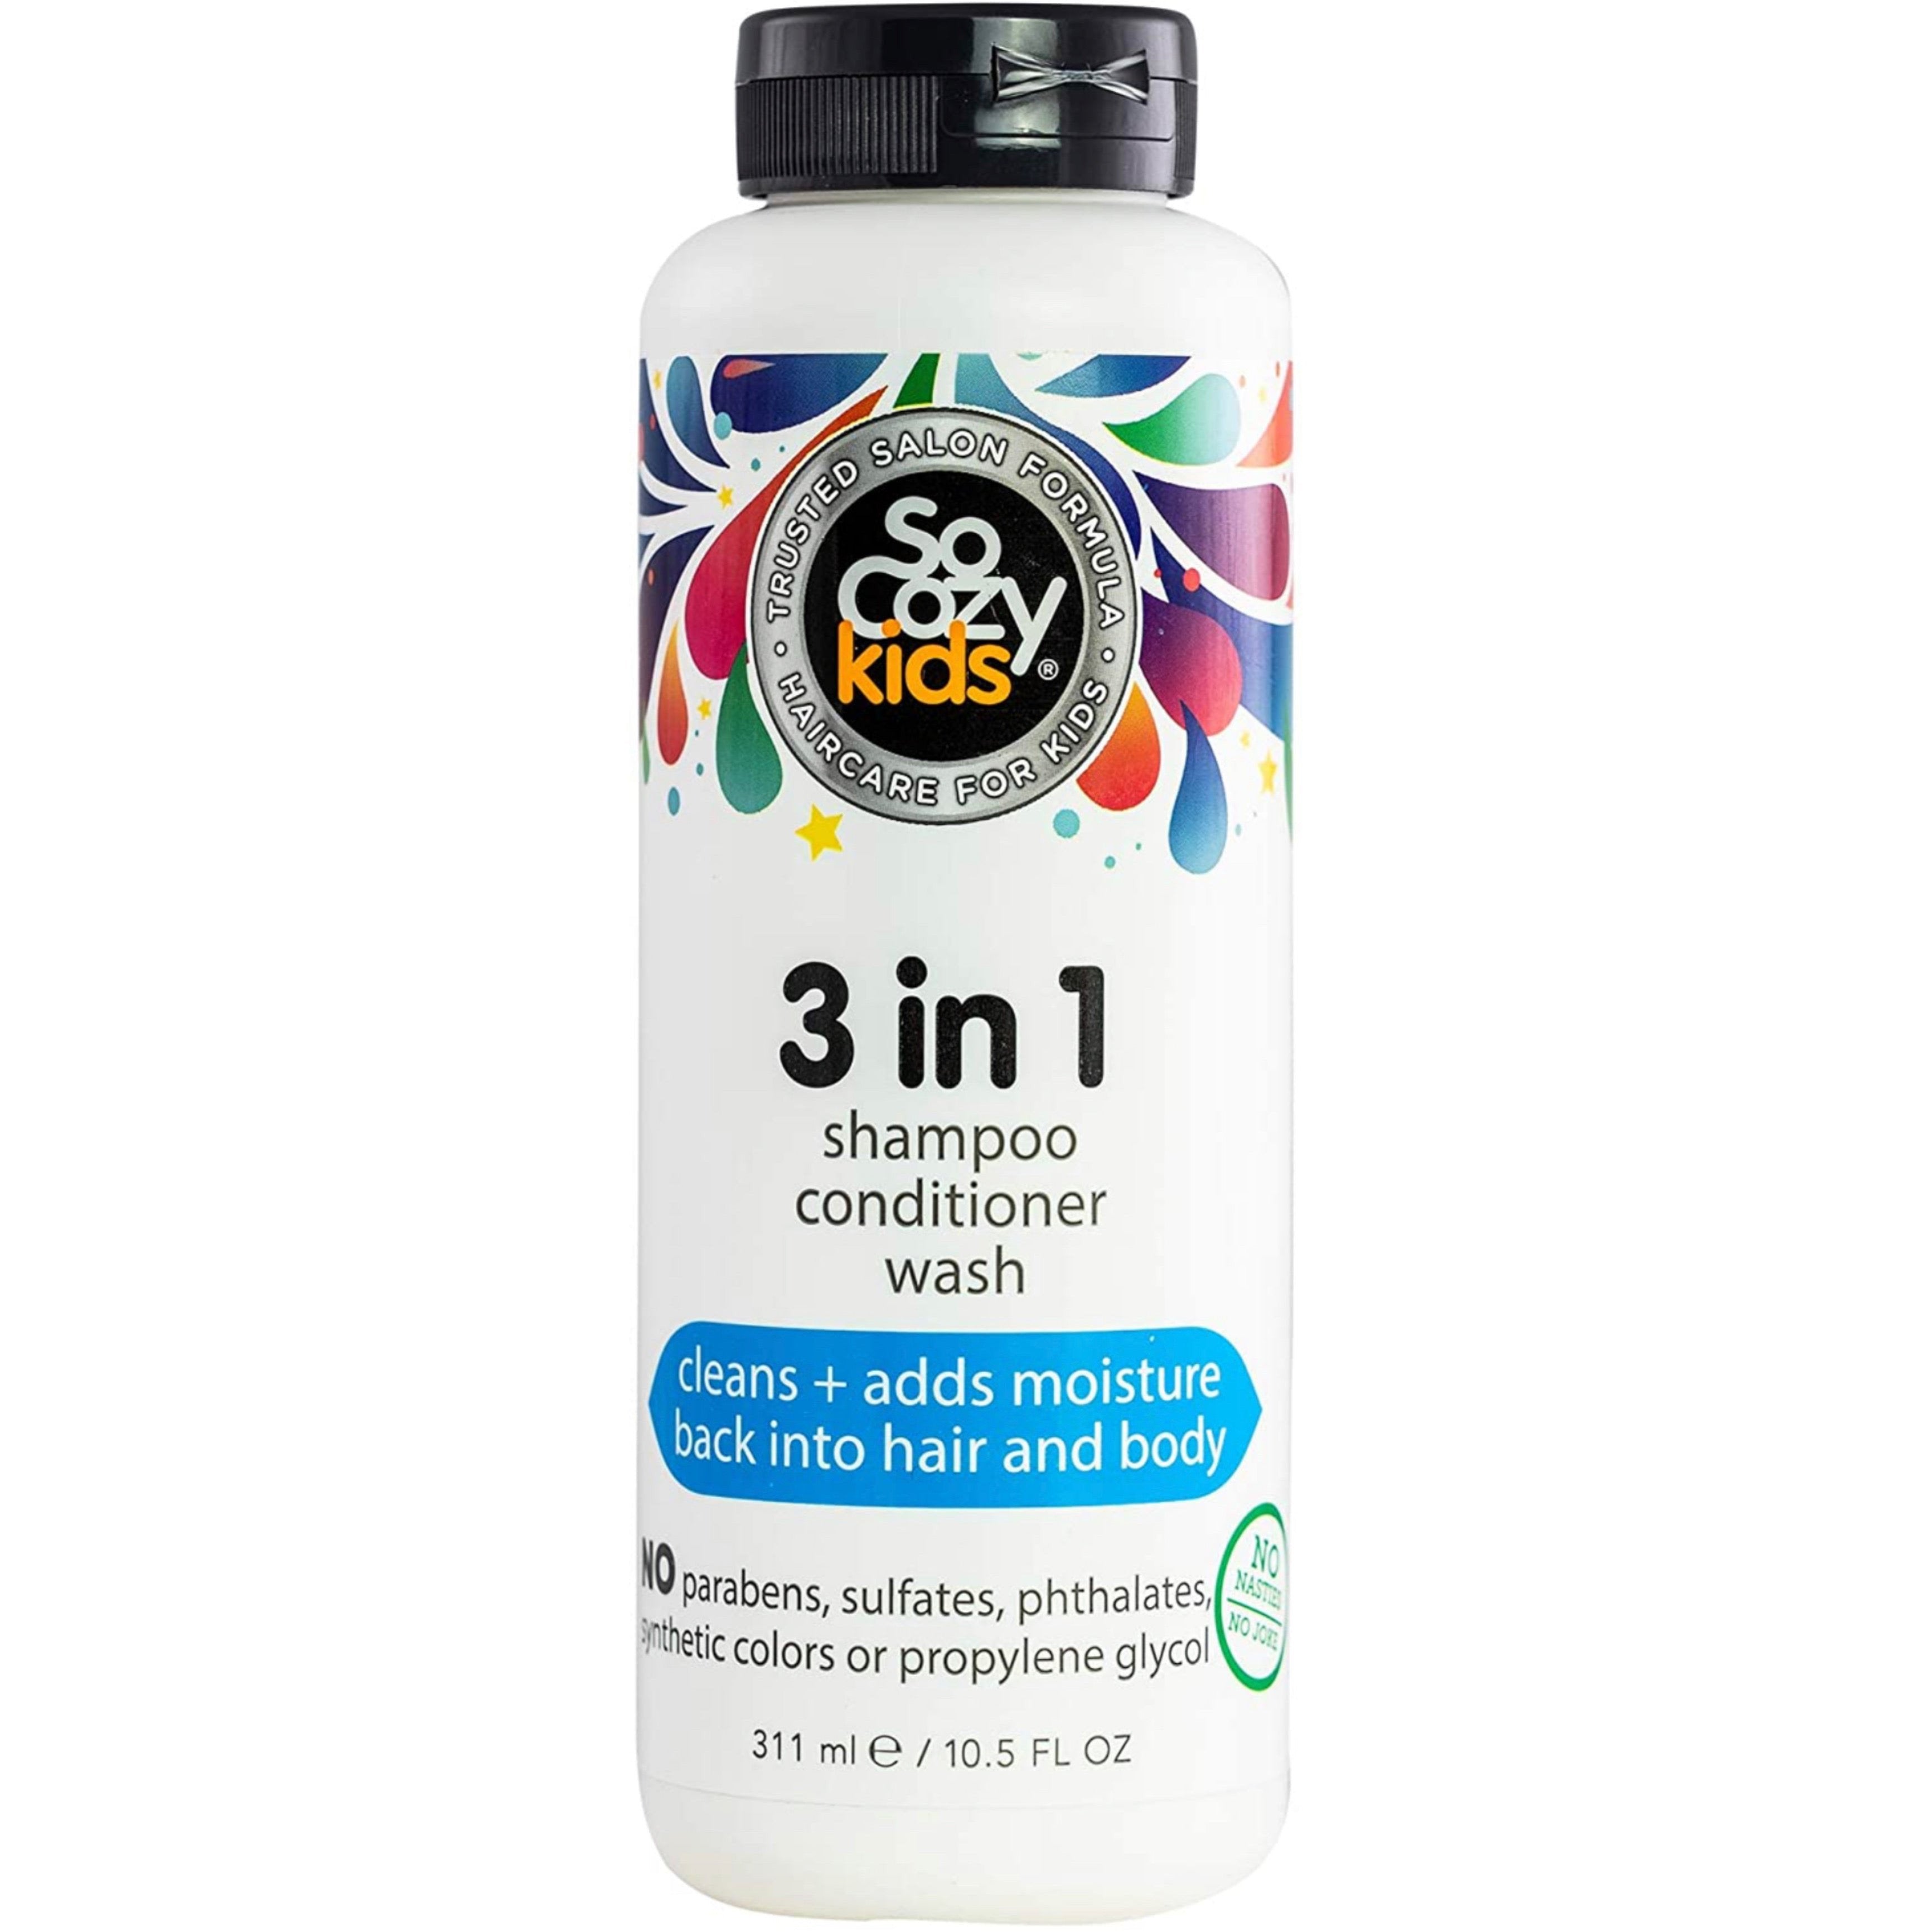 3-in-1 Shampoo, Conditioner & Body Wash by SoCozy Kids (310 ml).